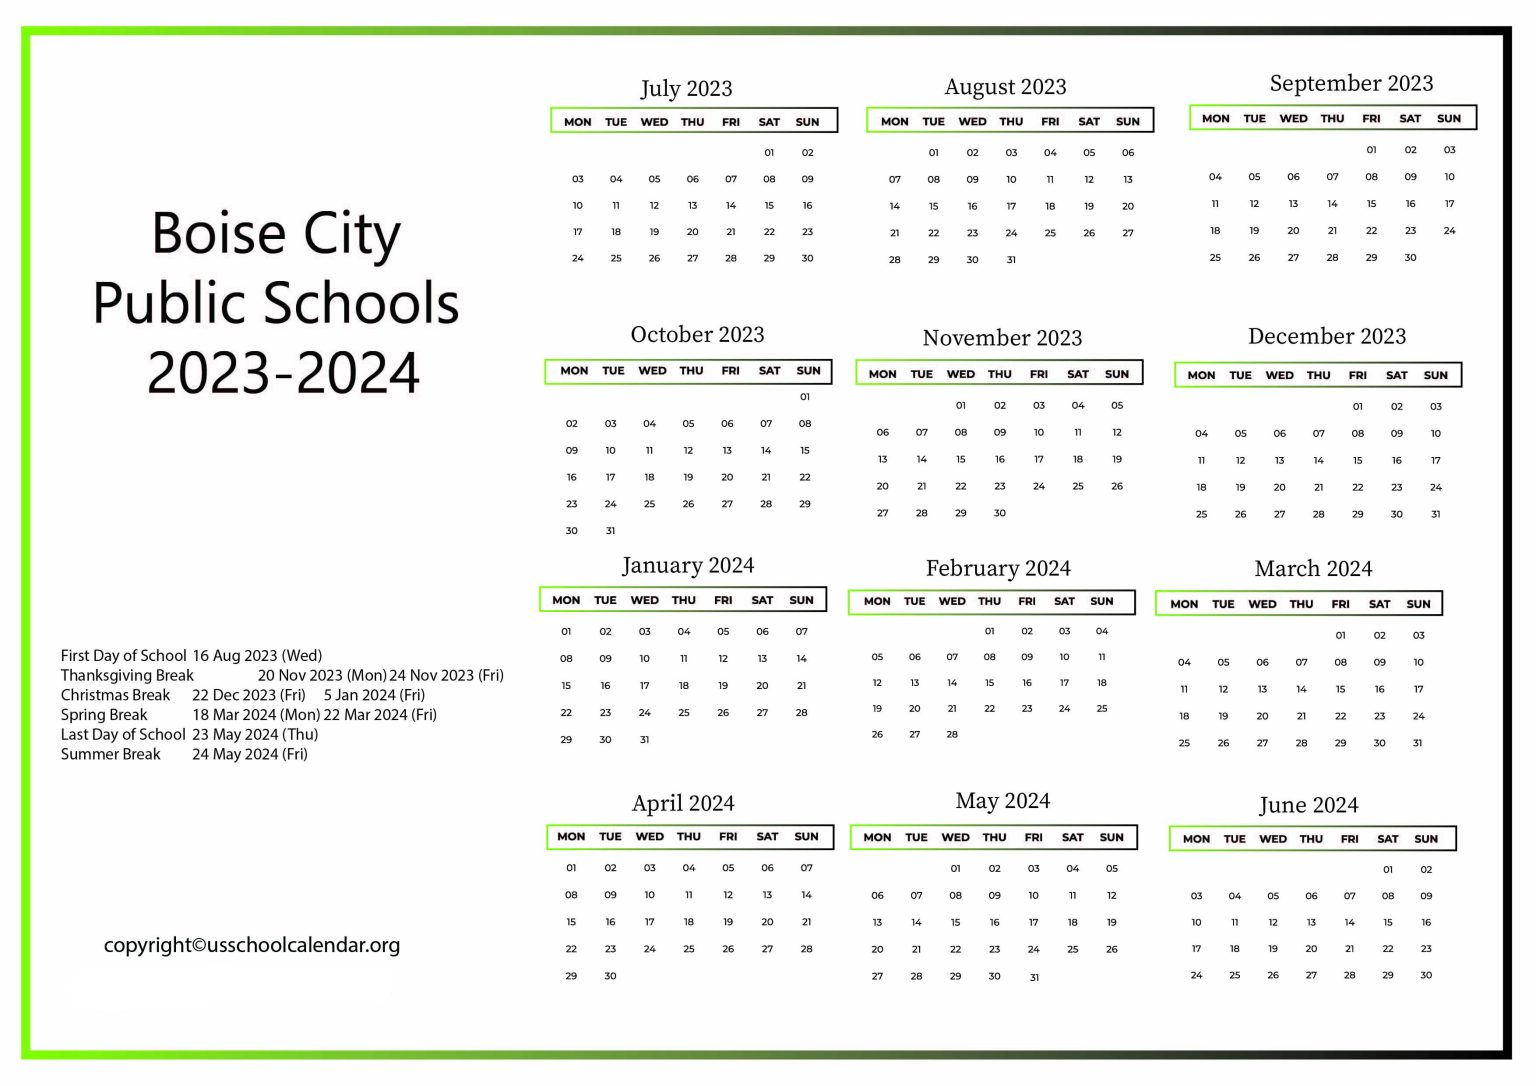 Boise City Public Schools Calendar with Holidays 2023 2024